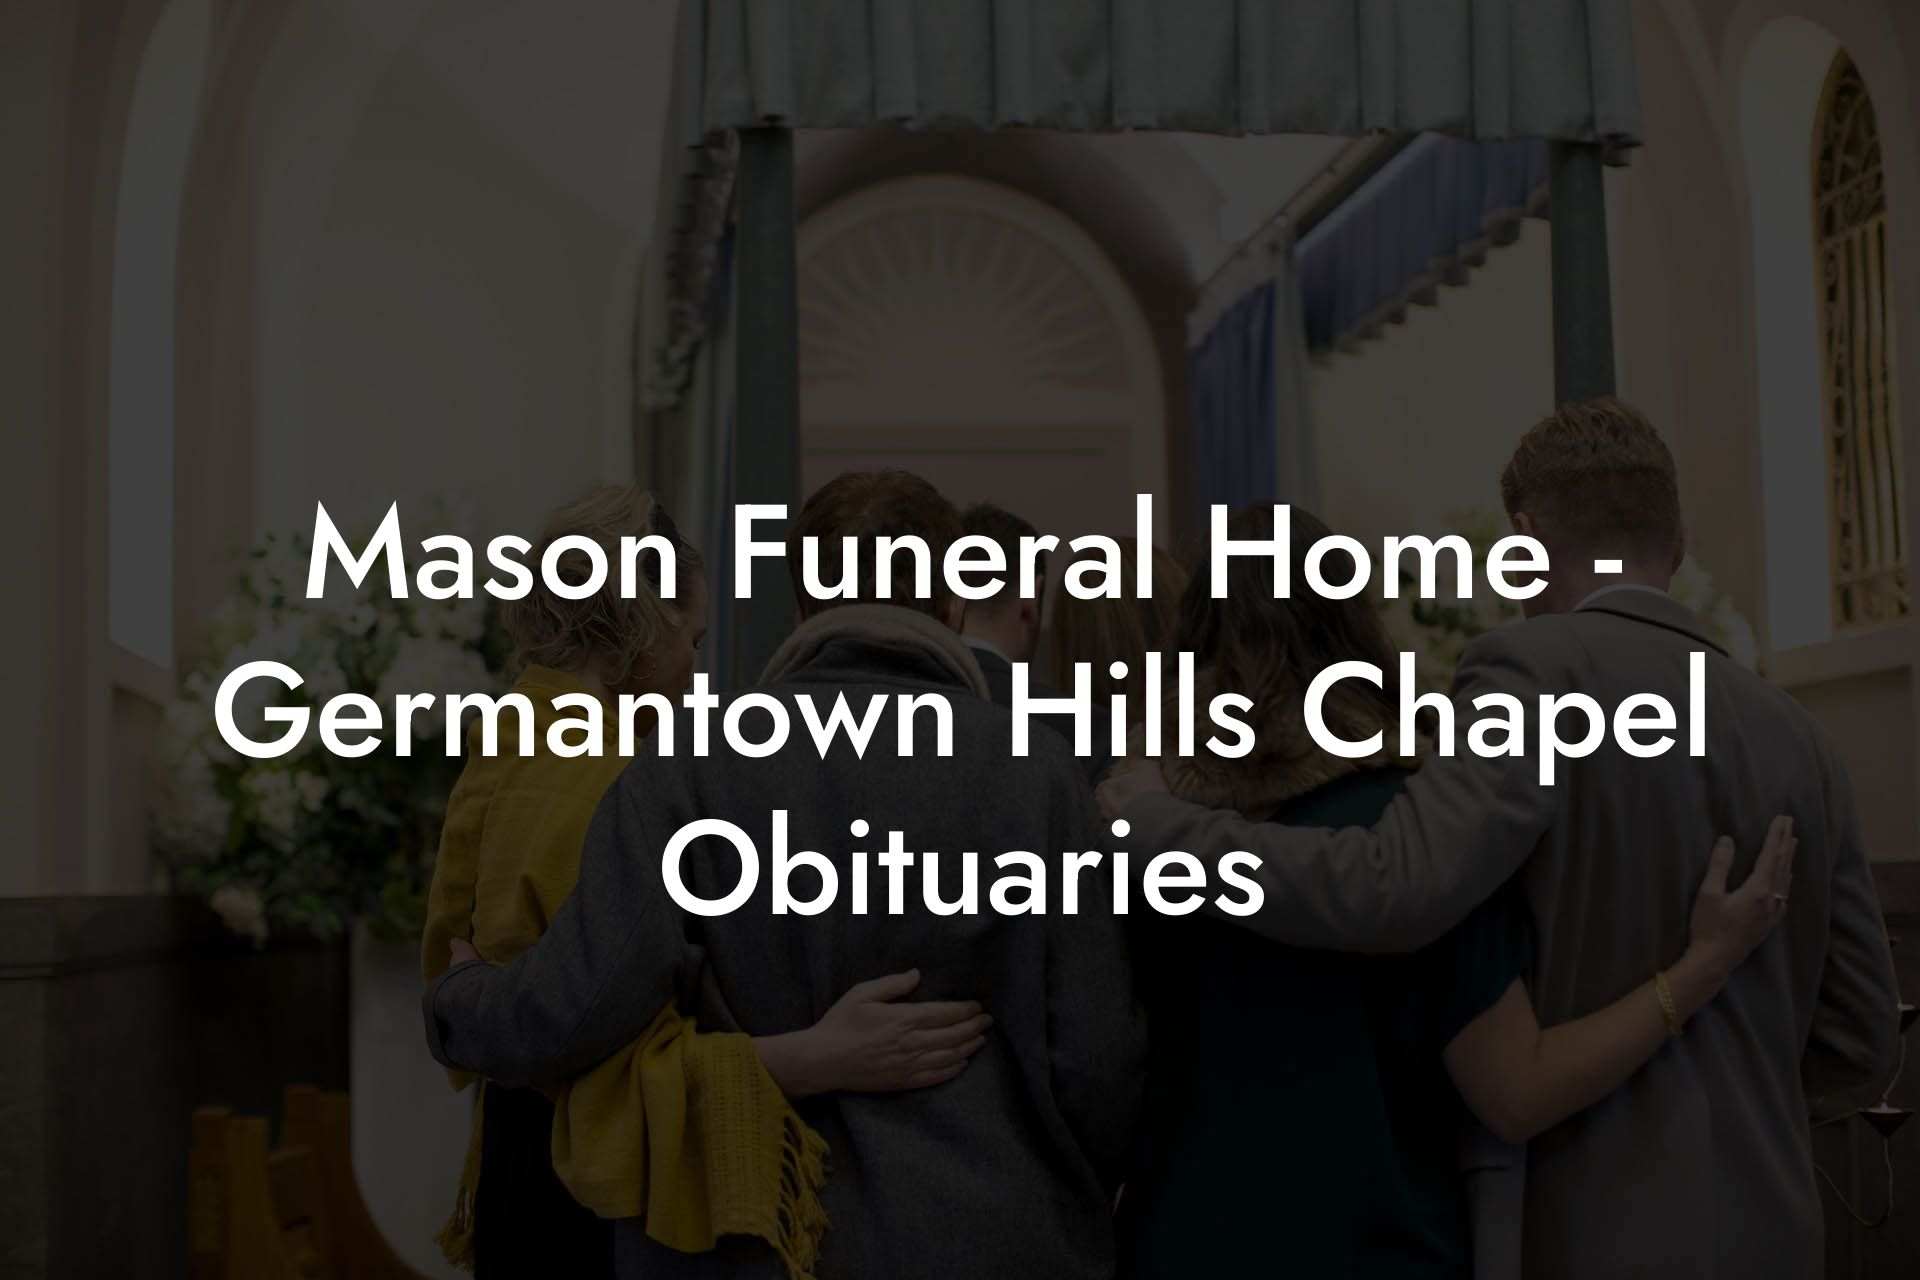 Mason Funeral Home - Germantown Hills Chapel Obituaries